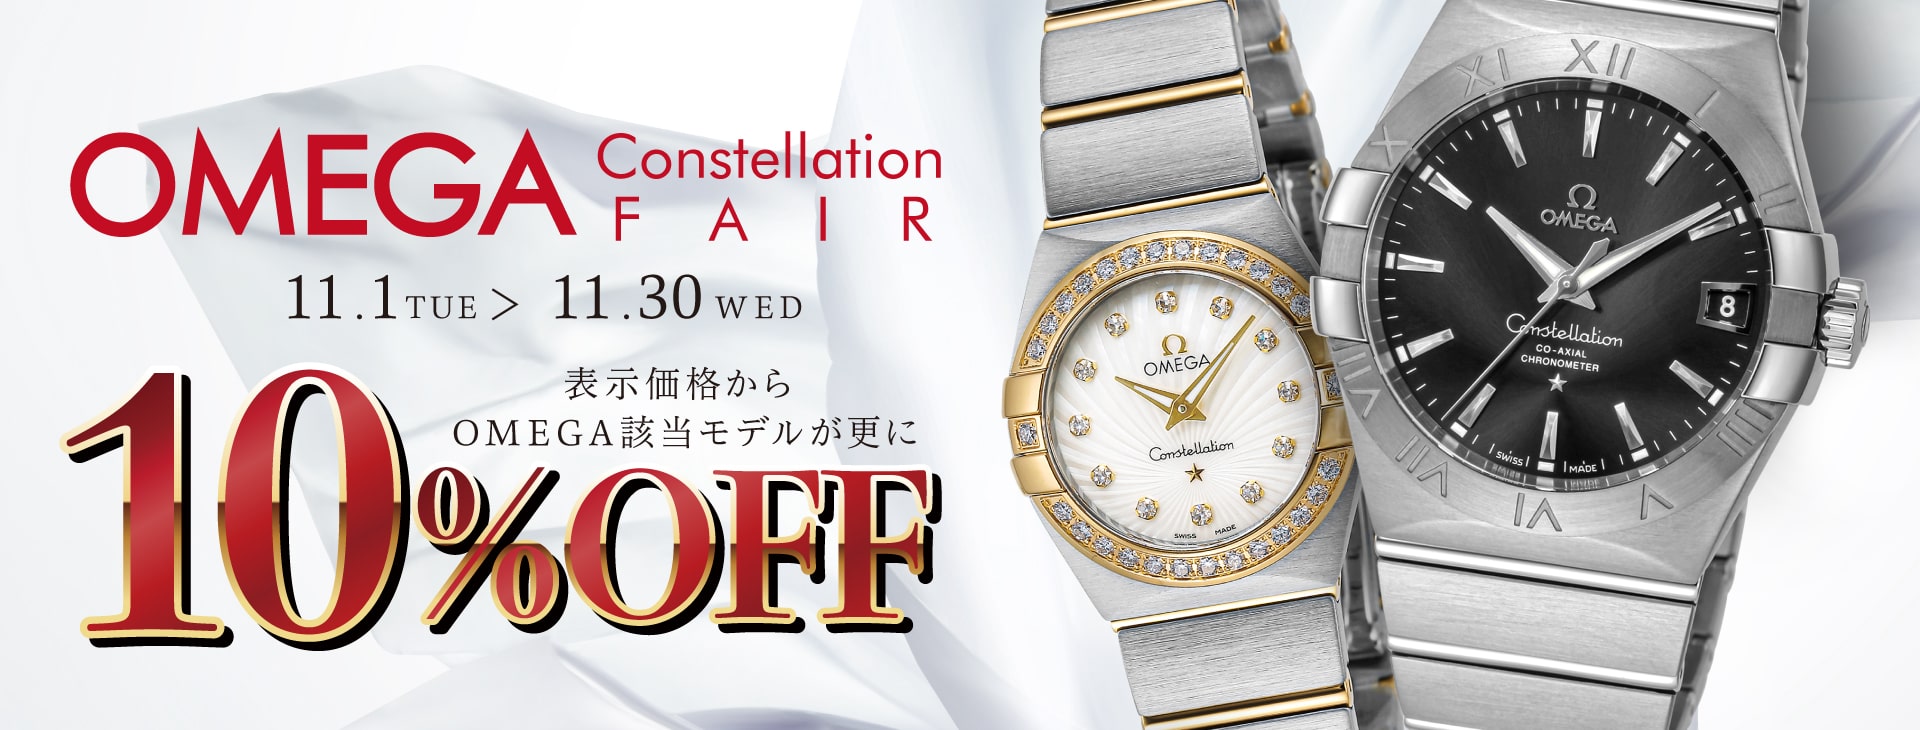 Omega Constellation 10% OFF Fair